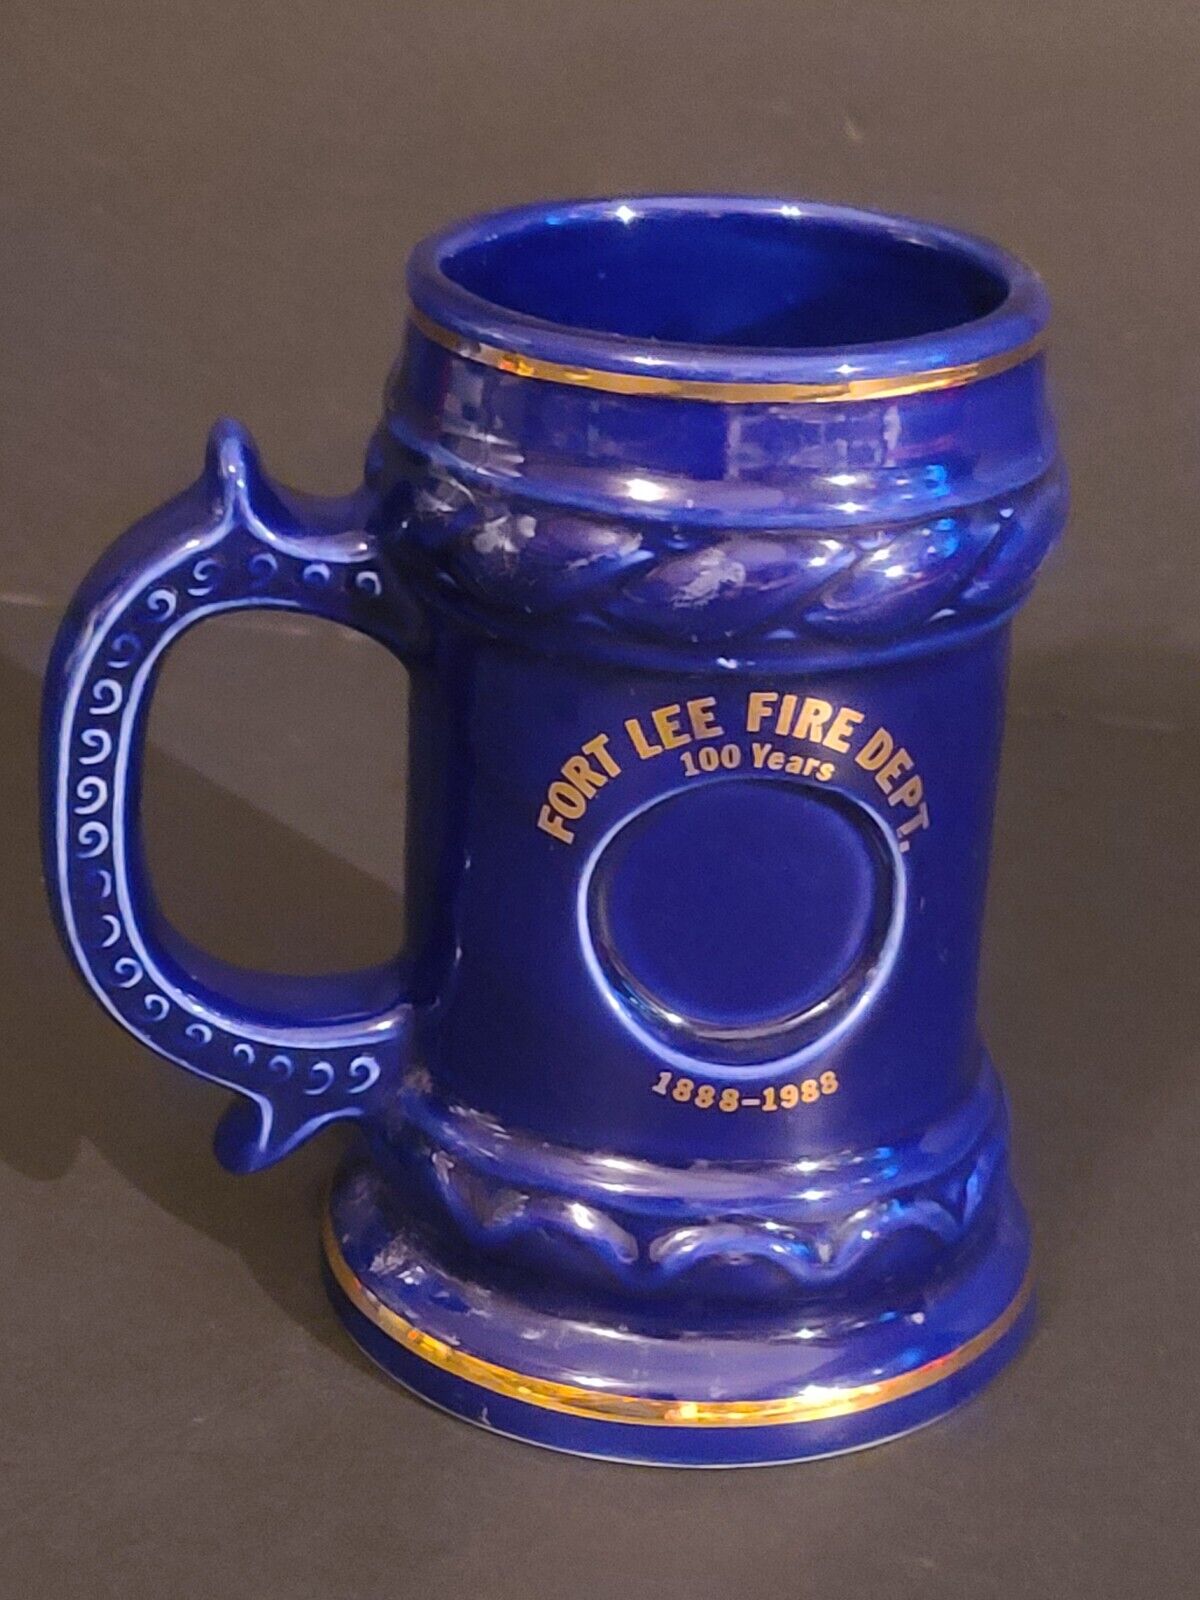 1988 Fort Lee Volunteer Fire Department 100 Year Ceramic Anniversary Stein Mug